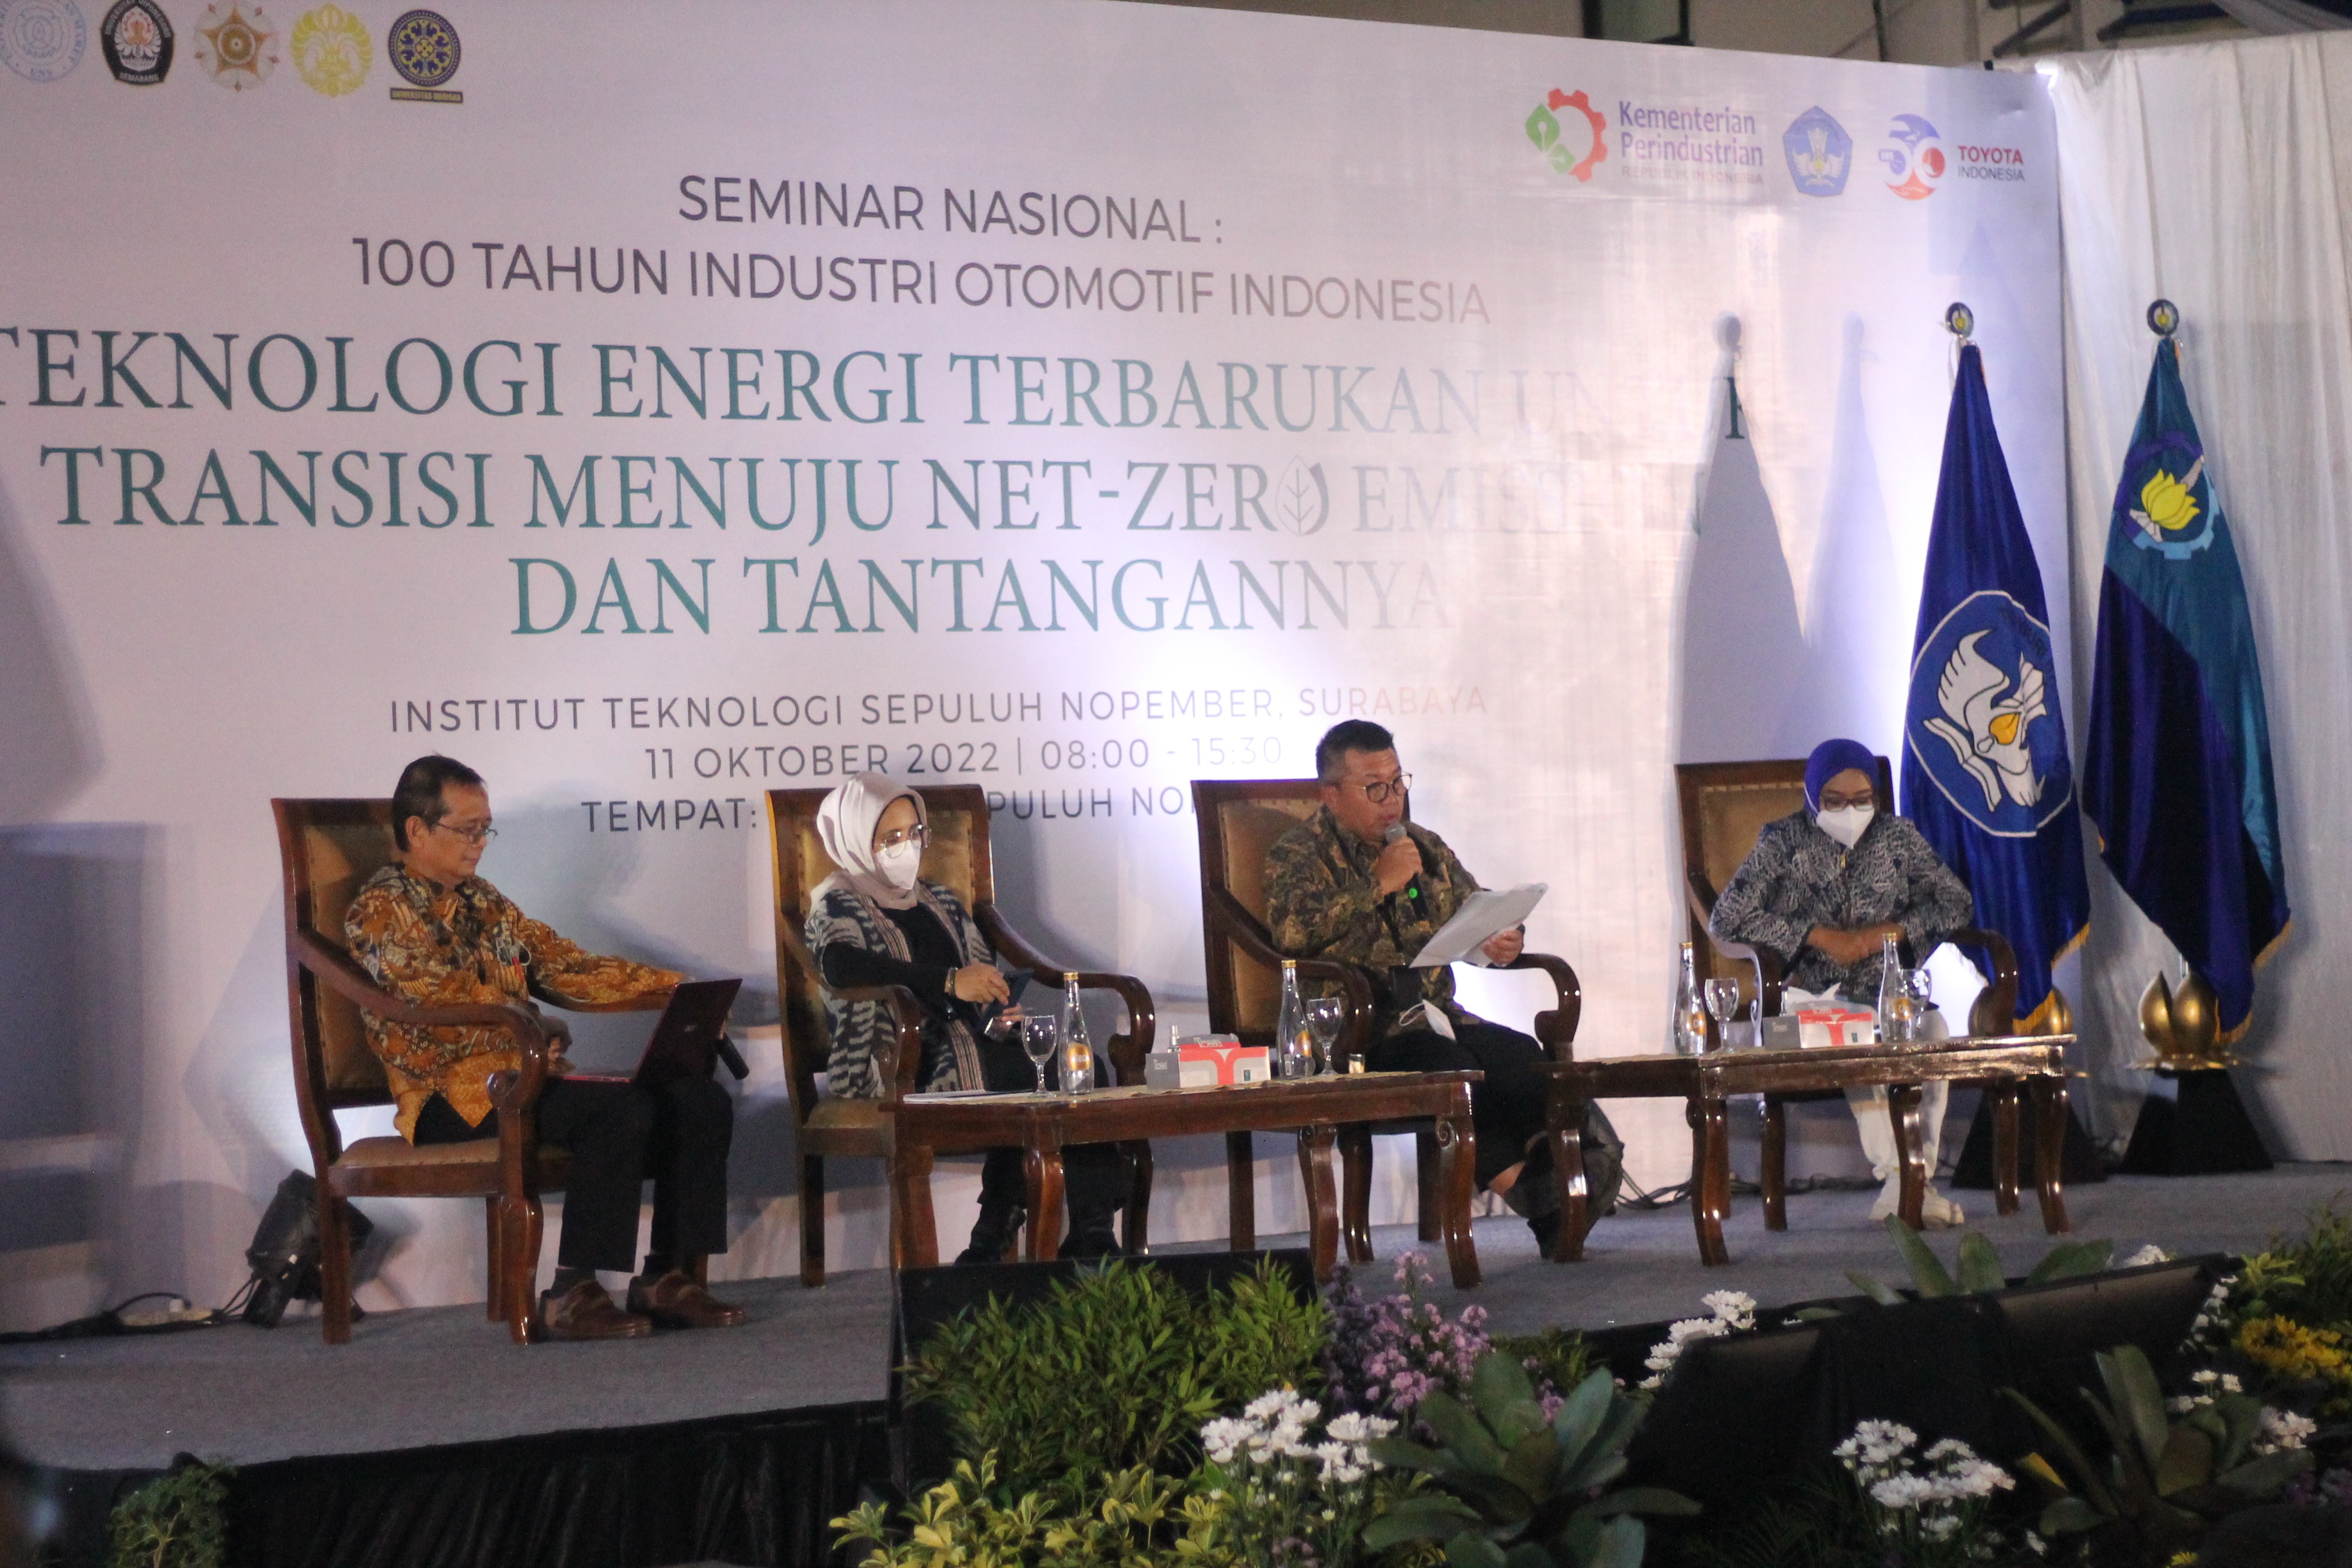 (dari kiri) Moderator Prof Prabowo,Cita Dewi mewakili Wiluyo Kusdwiharto dan Direktur Utama Pertamina gas Gamal Imam Santoso saat memaparkan materi seminar